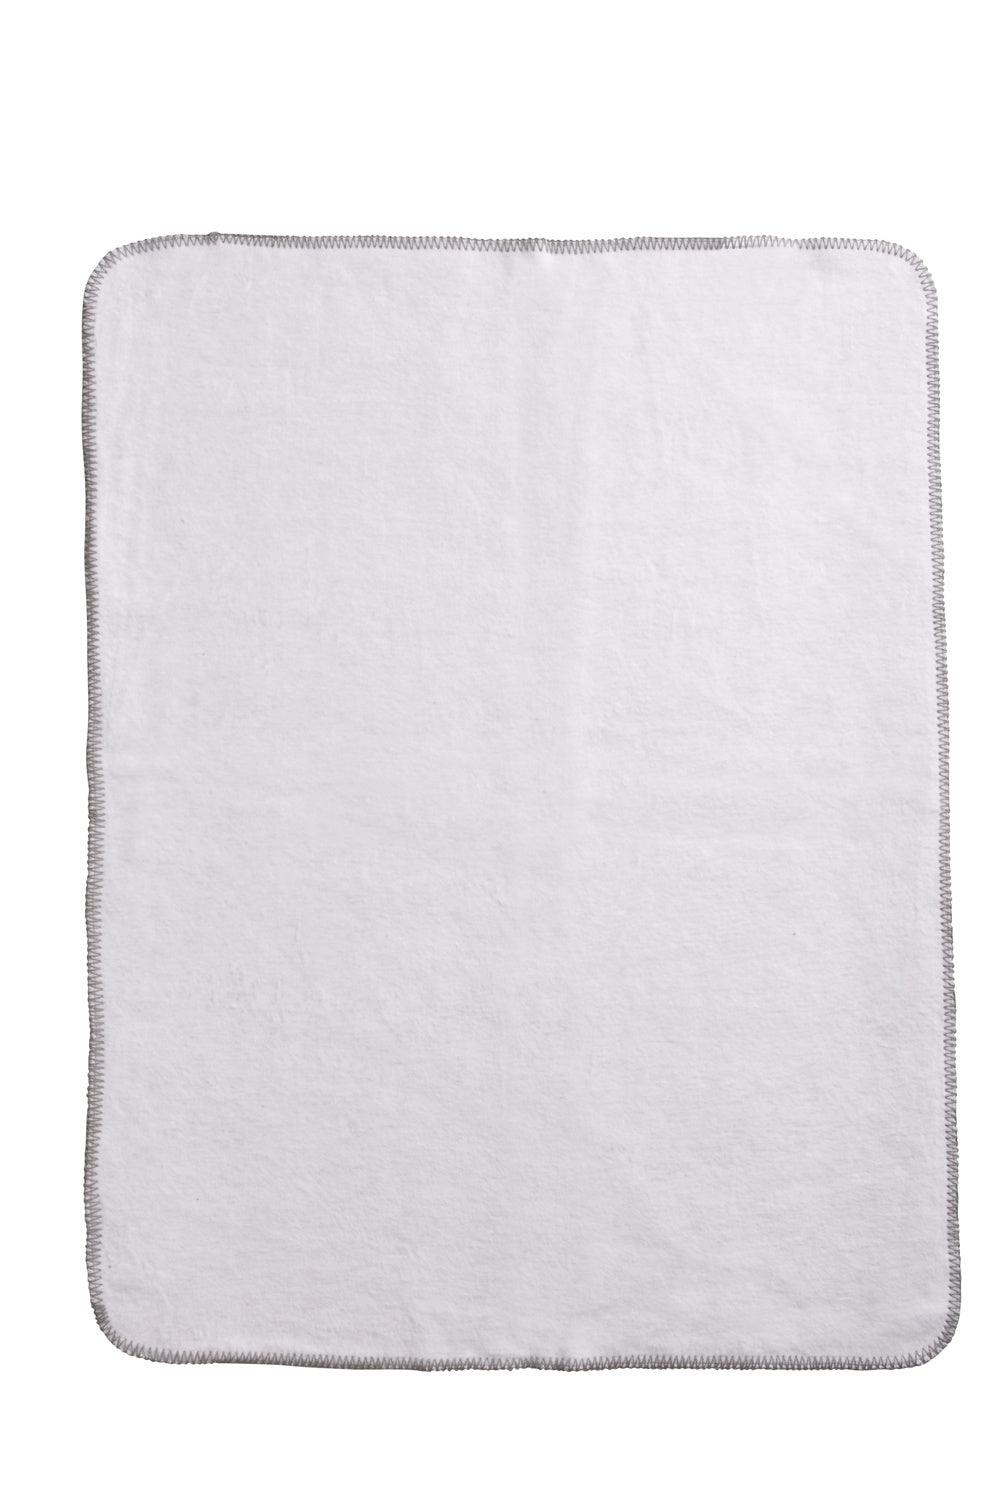 Cot Bed Blanket - Grey - 100x150cm - Mari Kali Stores Cyprus